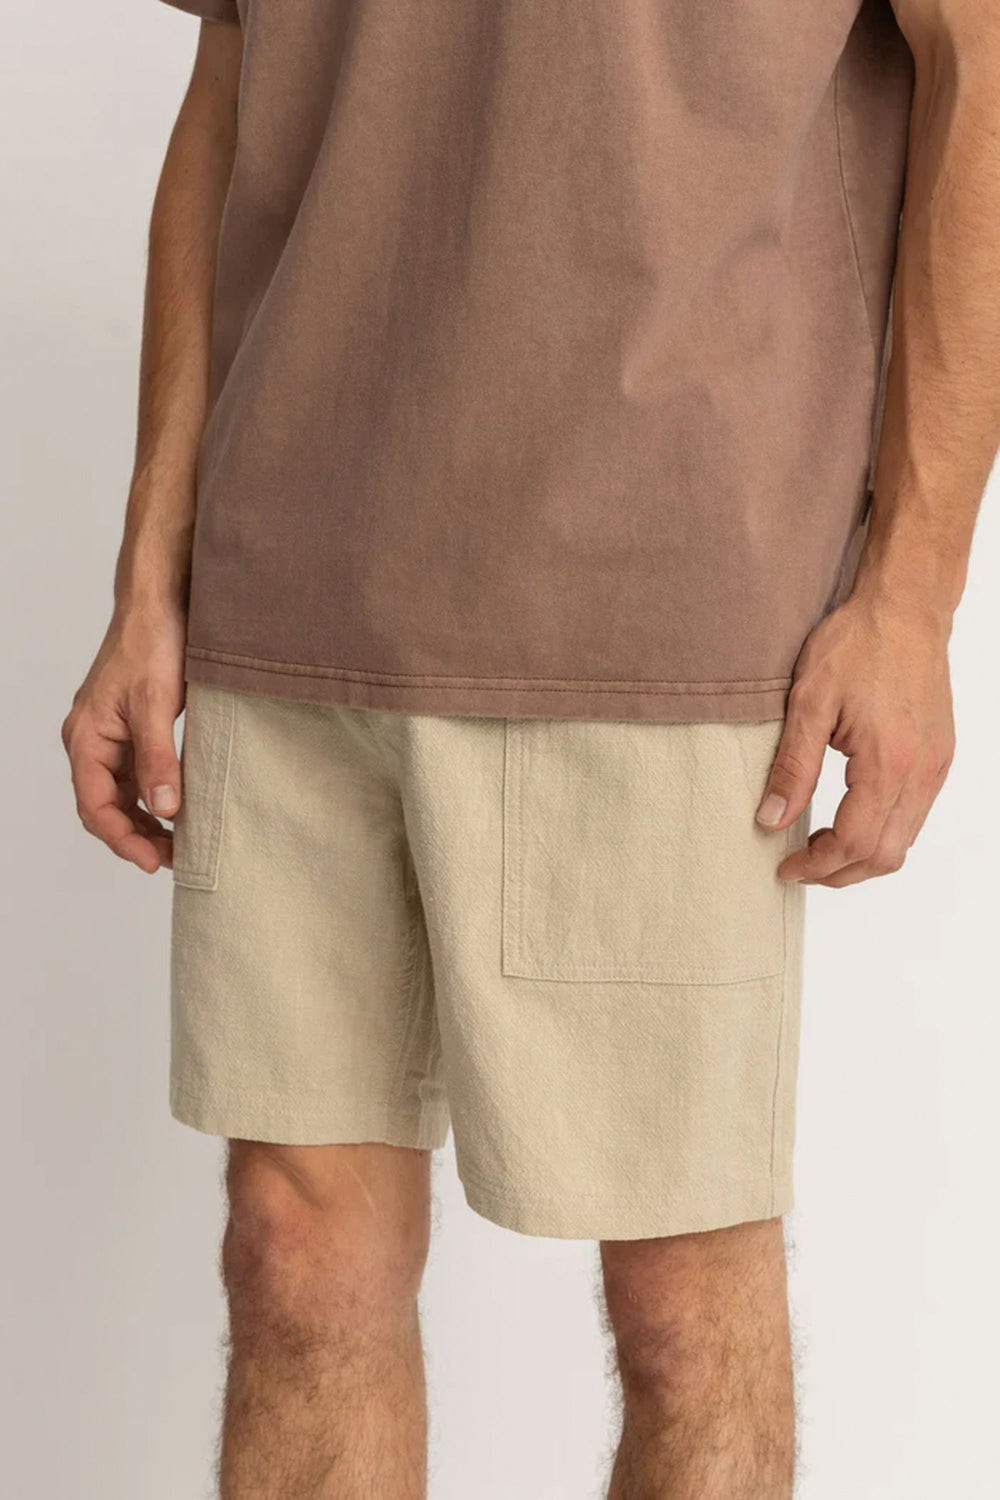 Pukas-surf-shop-rhythm-man-shorts-Worn-Path-Textured-Linen-Short